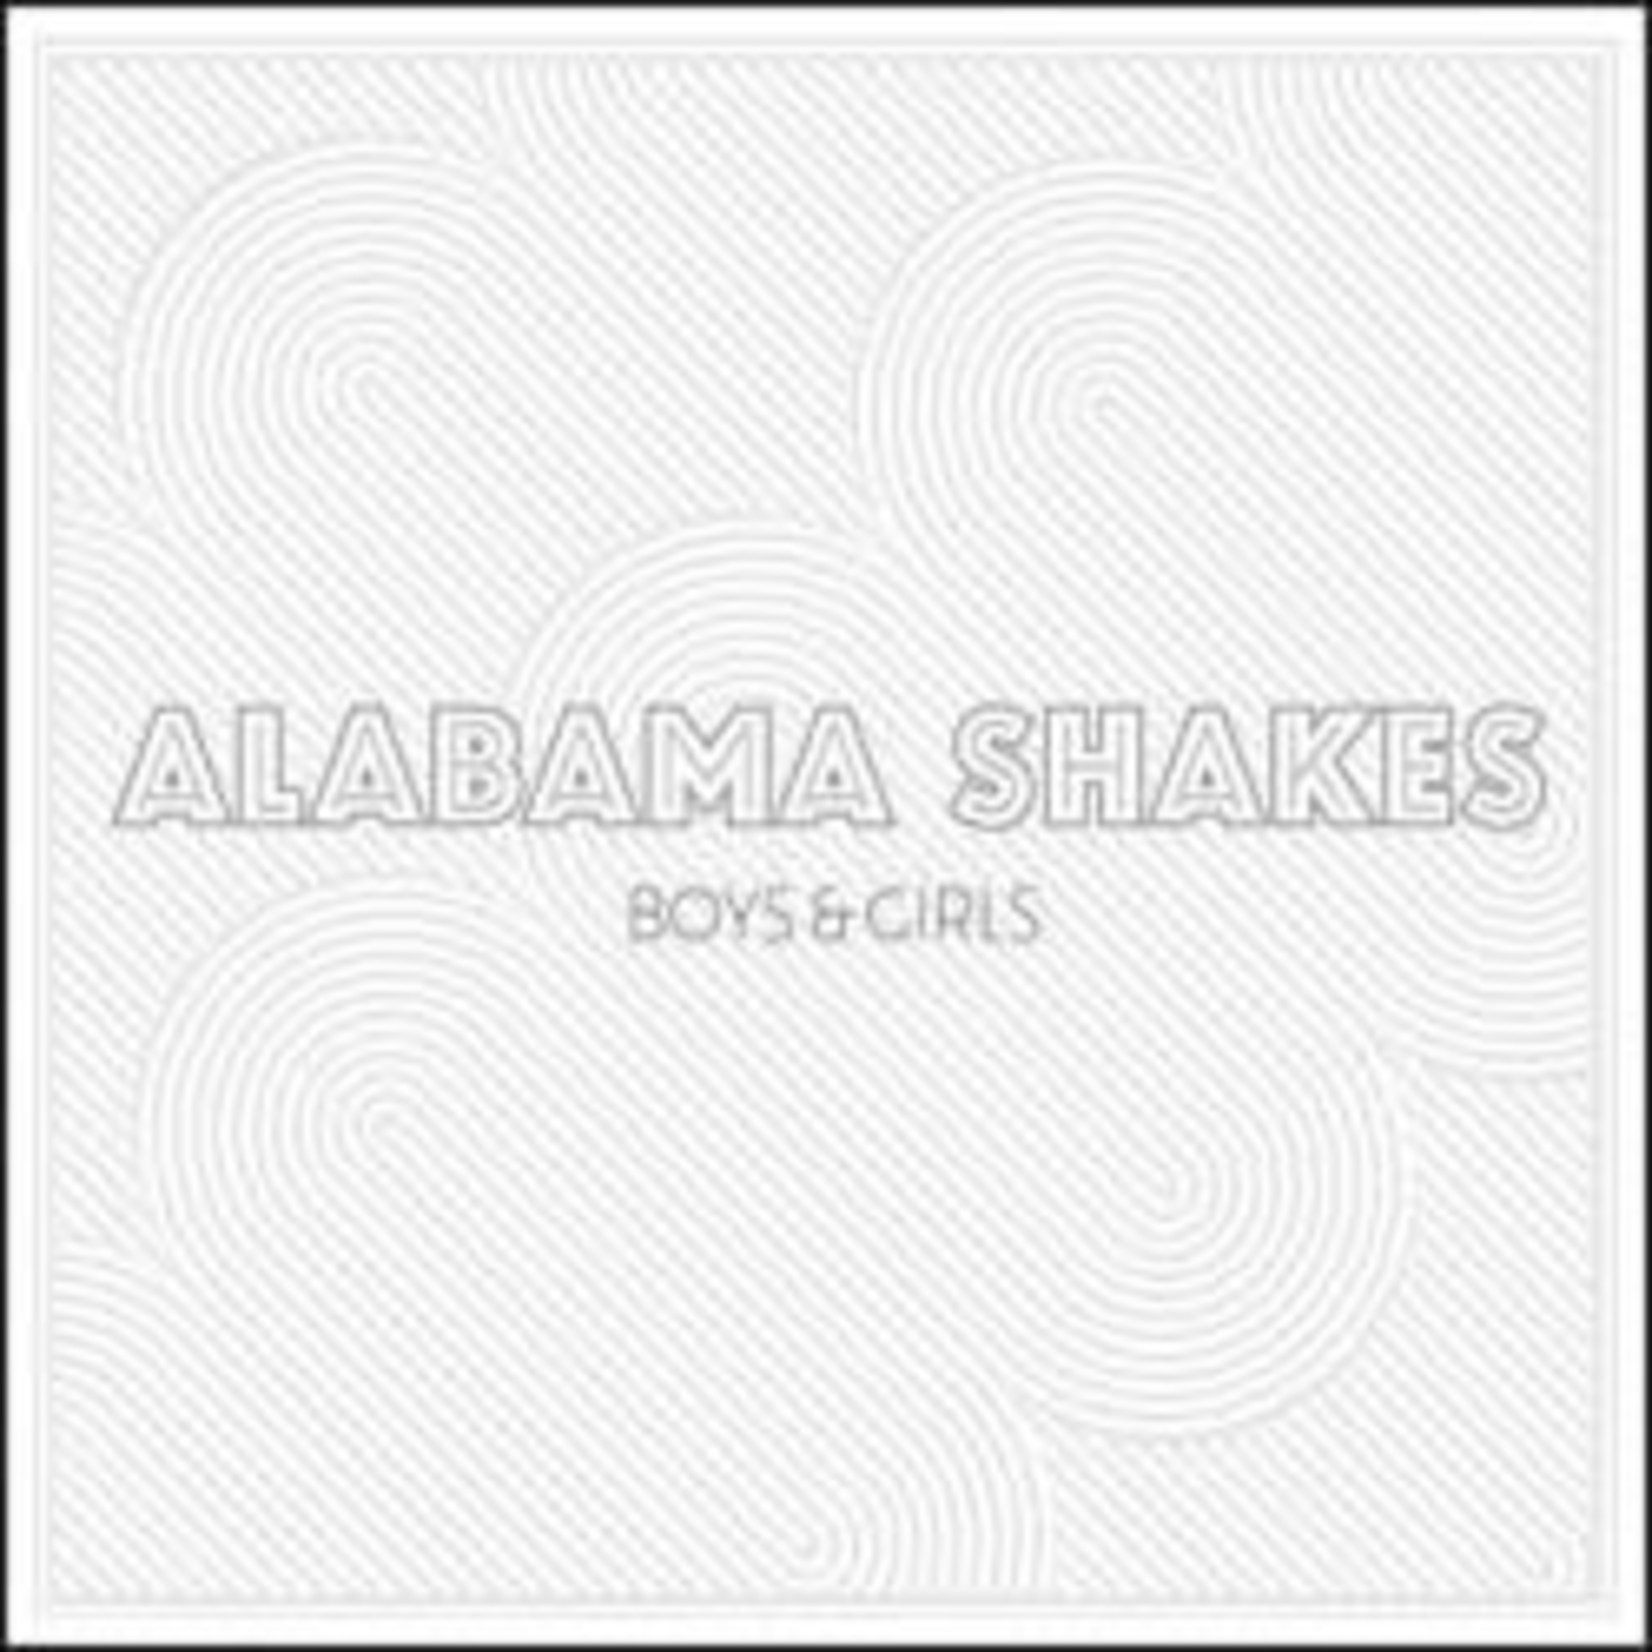 RSD Essential Alabama Shakes - Boys & Girls (LP) [Black/White]